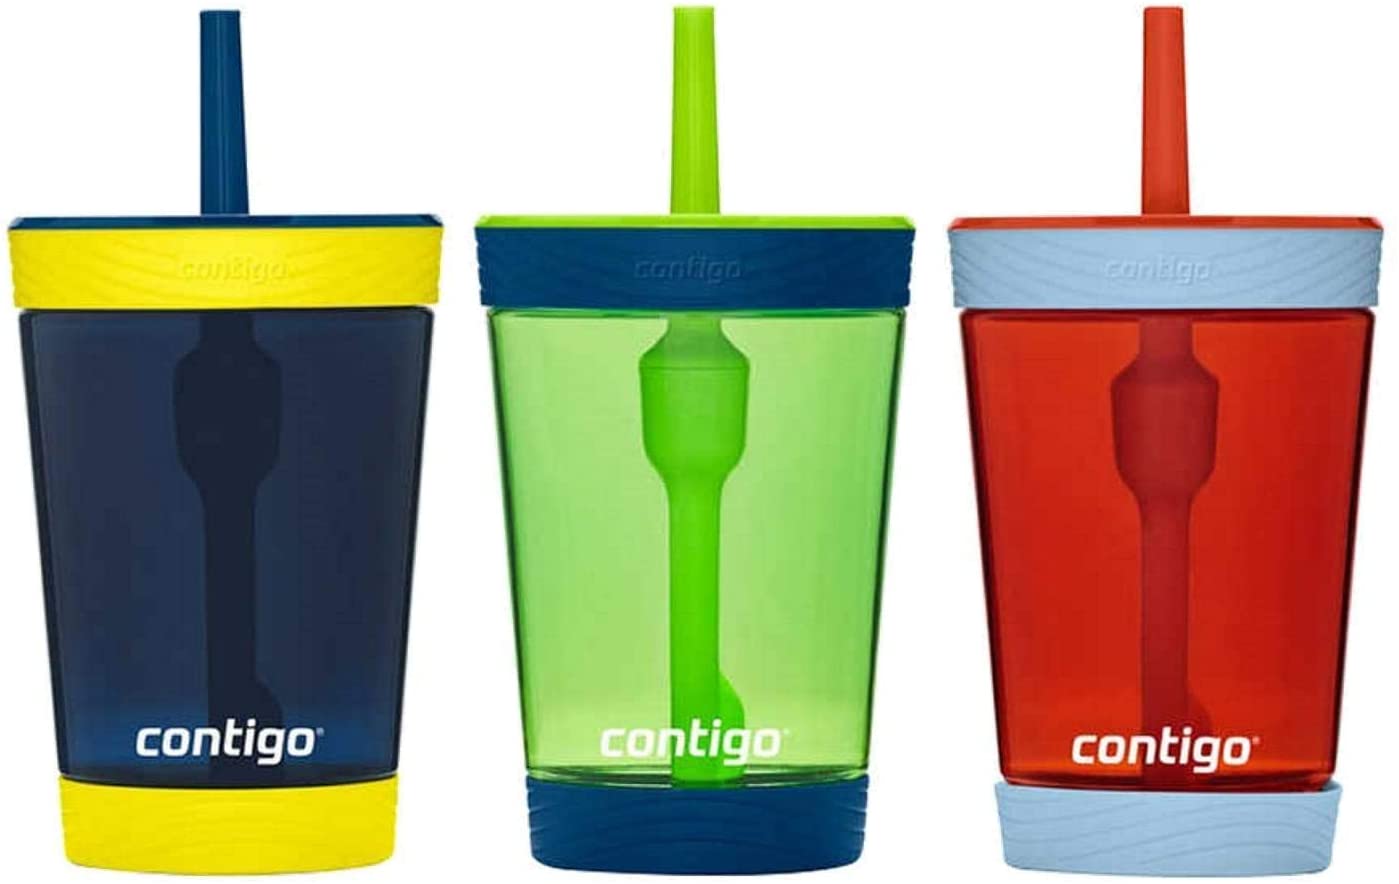 https://www.dontwasteyourmoney.com/wp-content/uploads/2019/06/contigo-spill-proof-kids-tumbler-leakproof-cup-3-pack.jpg